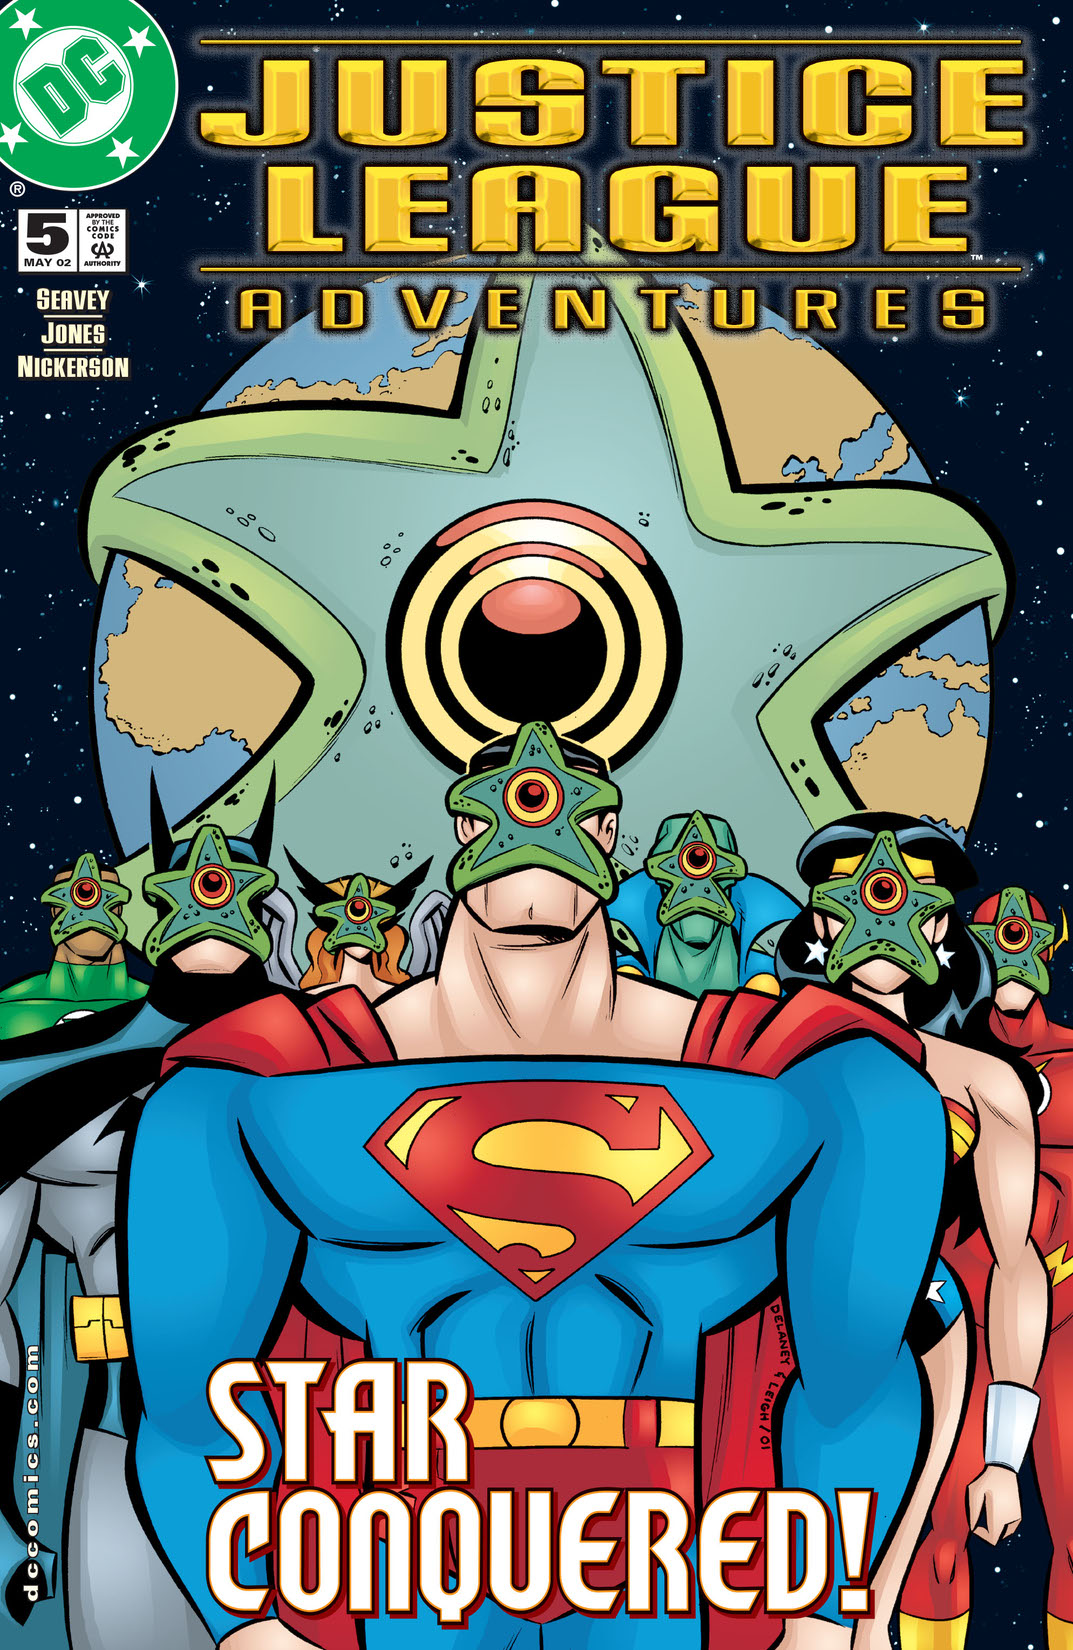 Justice League Adventures #5 preview images